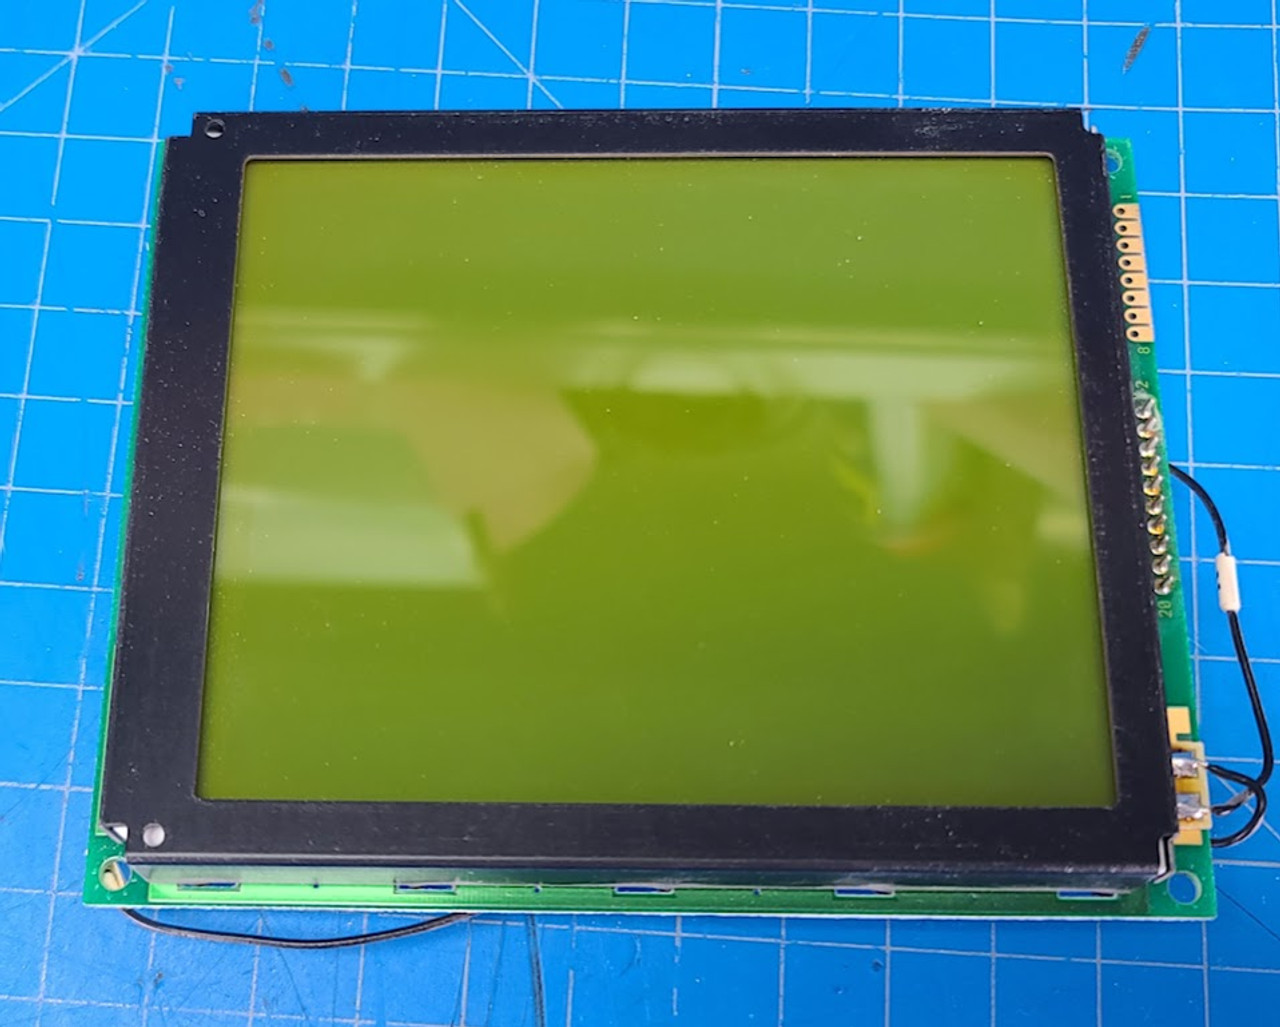 Optrex 4.7" LCD Screen and Circuit Board DMF5001NY-LK